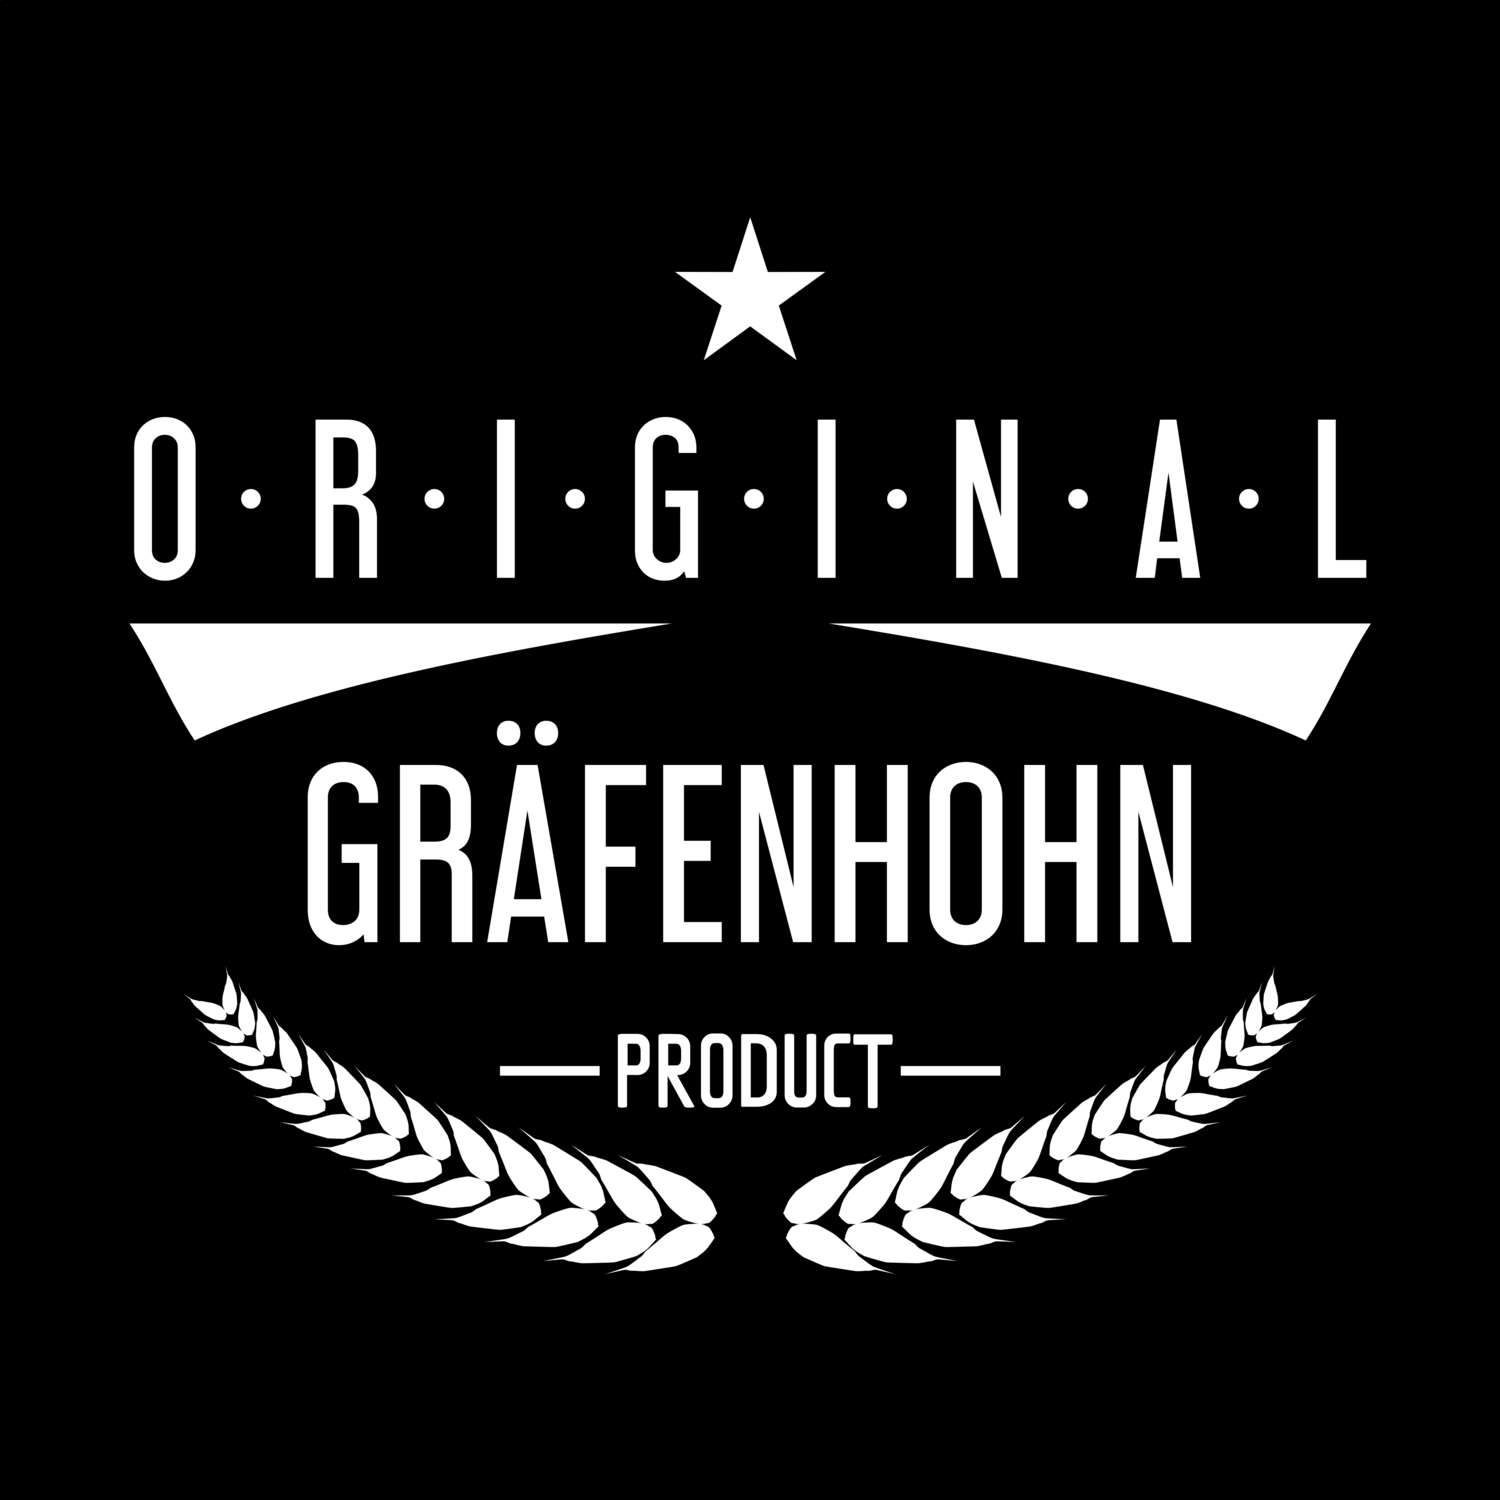 Gräfenhohn T-Shirt »Original Product«